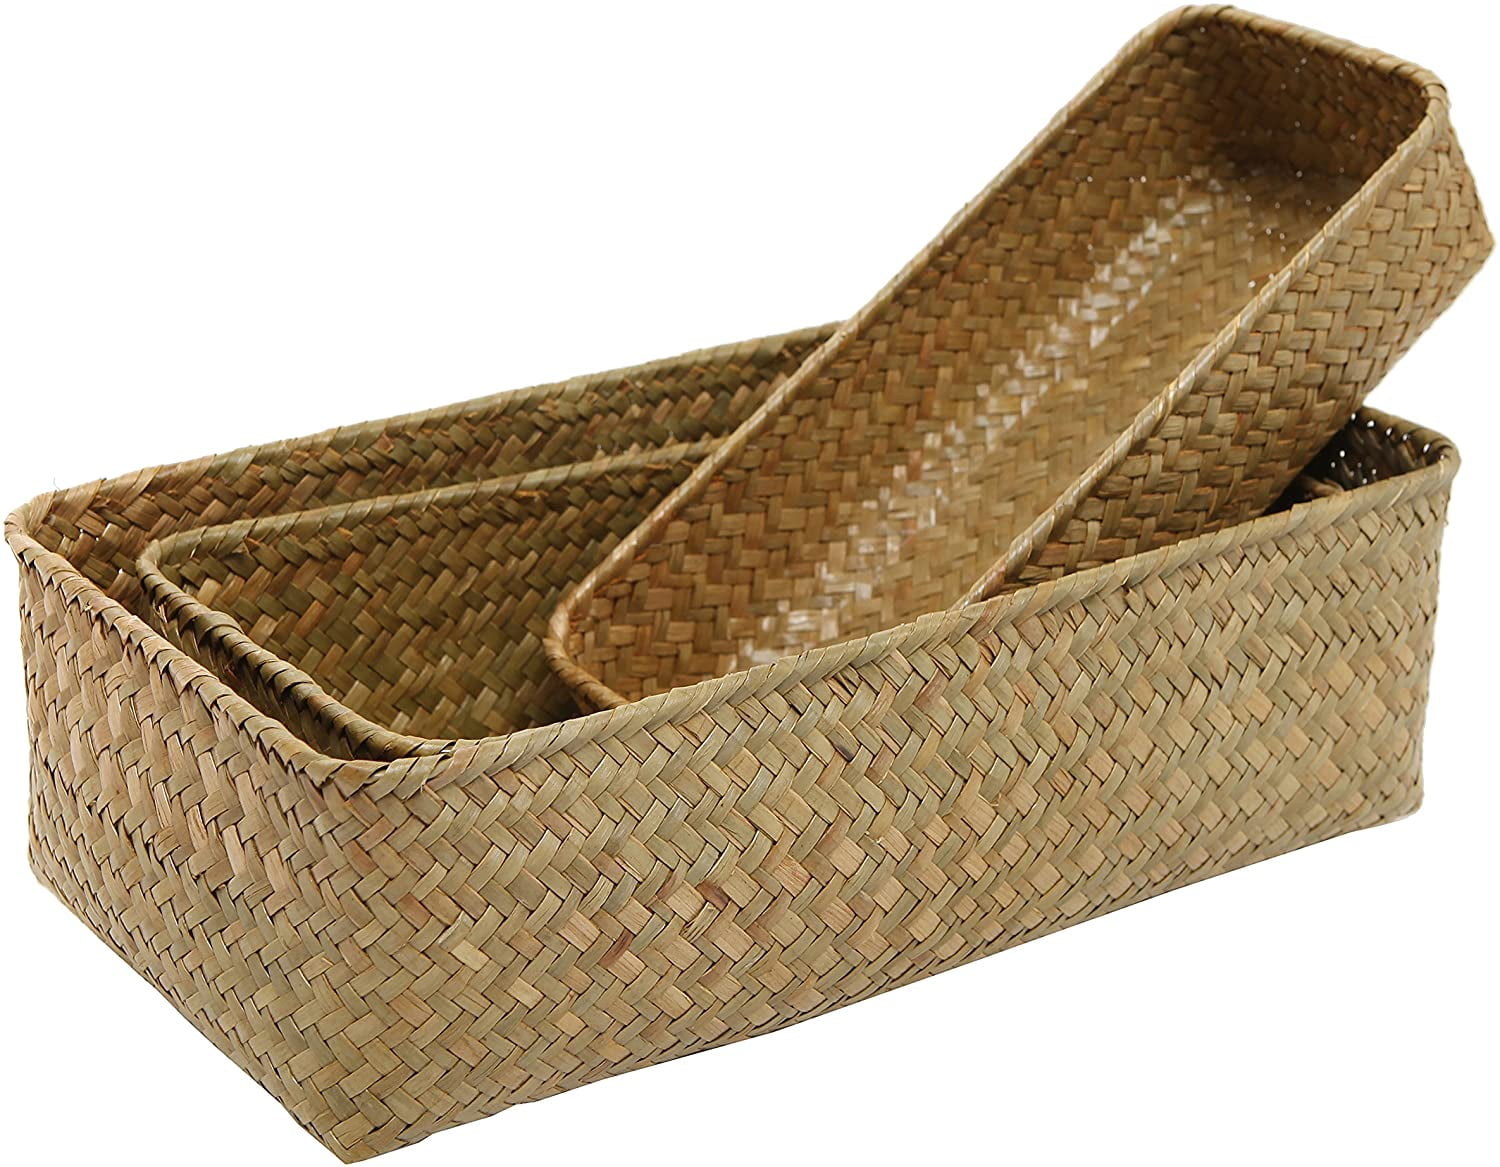 Handwoven Natural Seagrass Wicker Nesting Organizer Storage Baskets Set of 3 